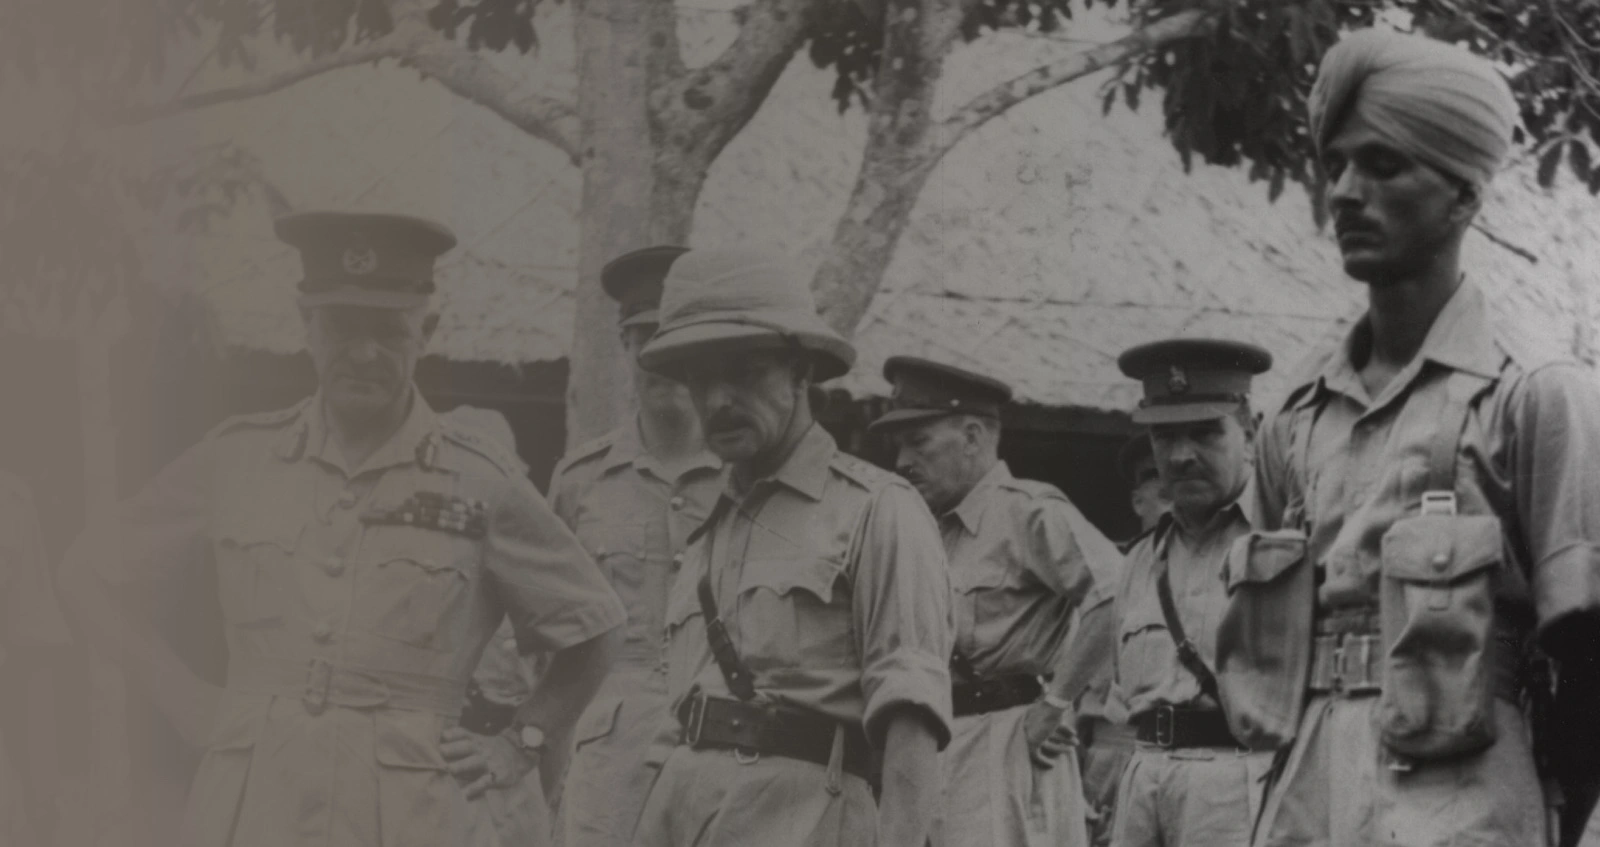 Lieutenant-General Sir William Slim, 14th Army Commander, talking to an African gunner